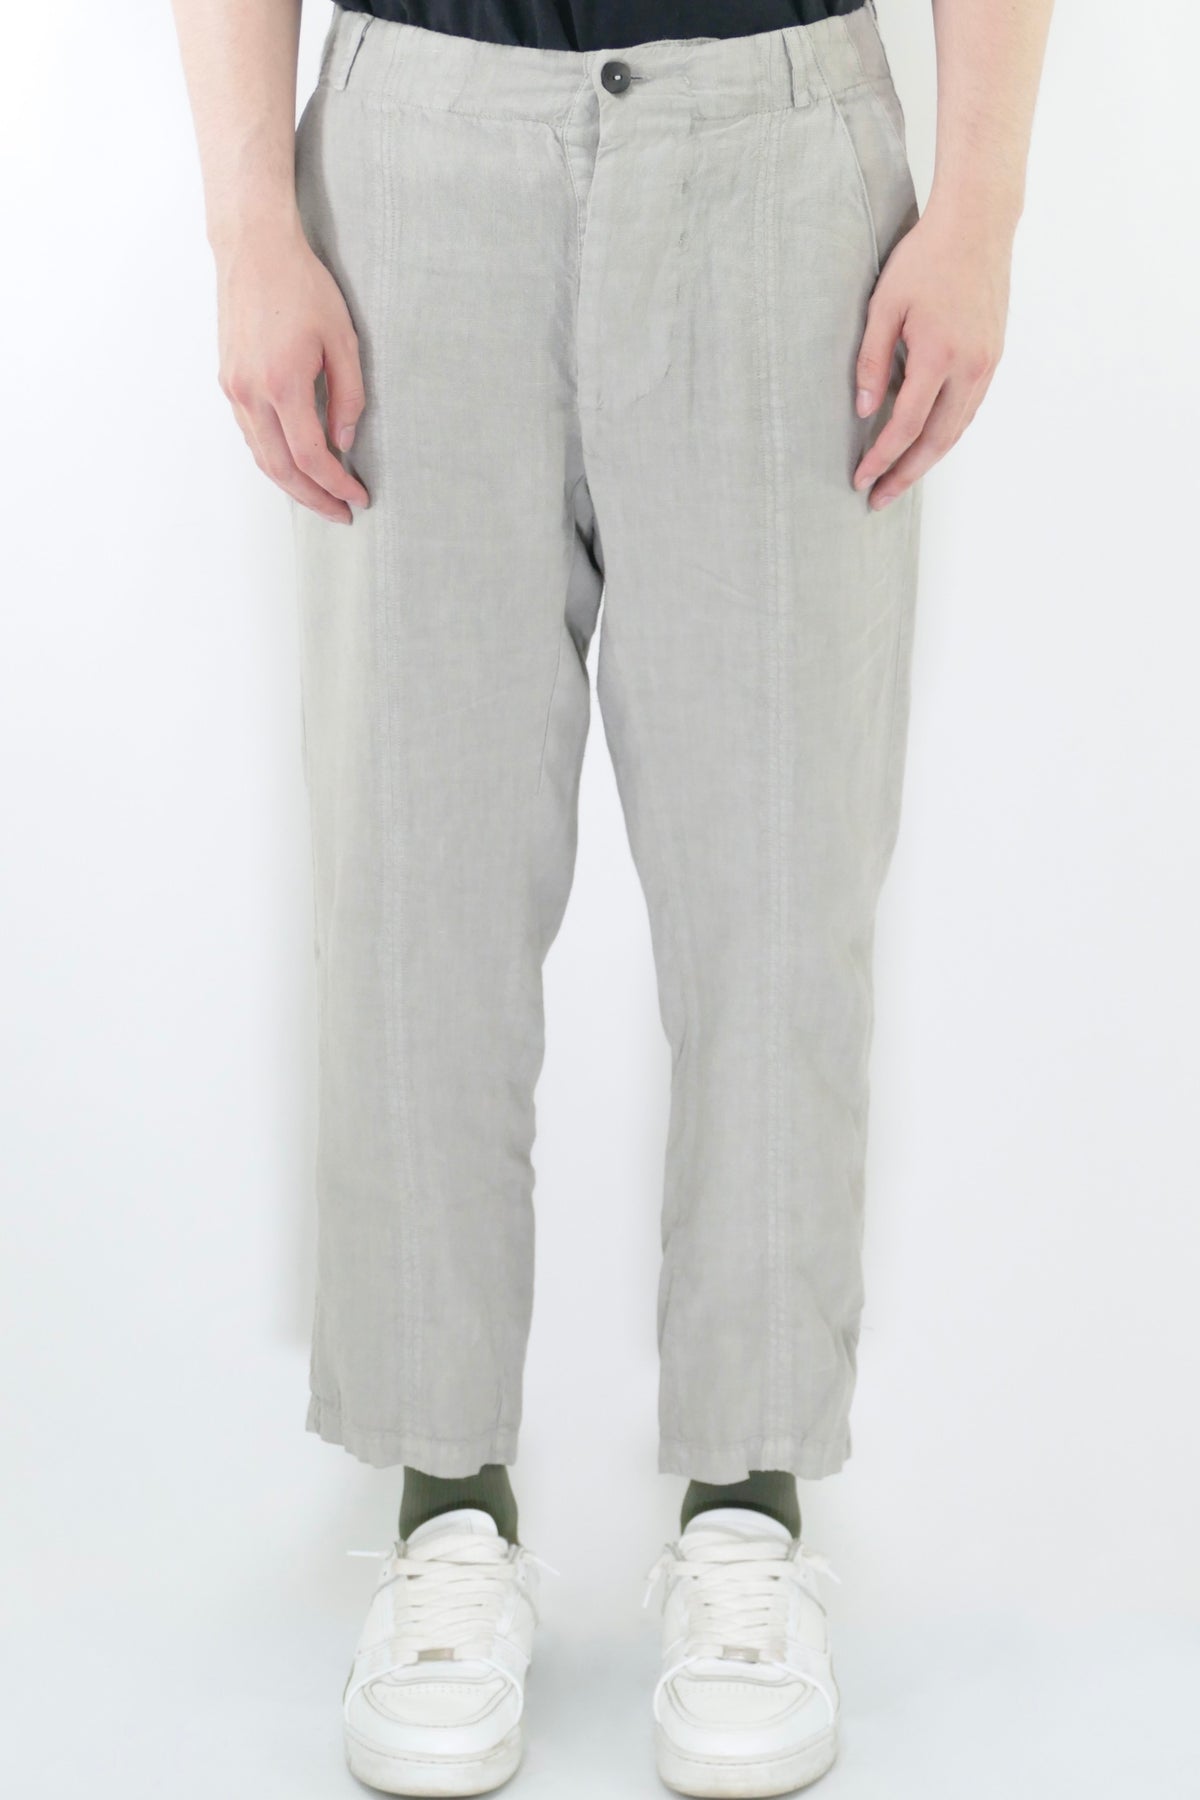 Athoa Cropped Pants - Grey